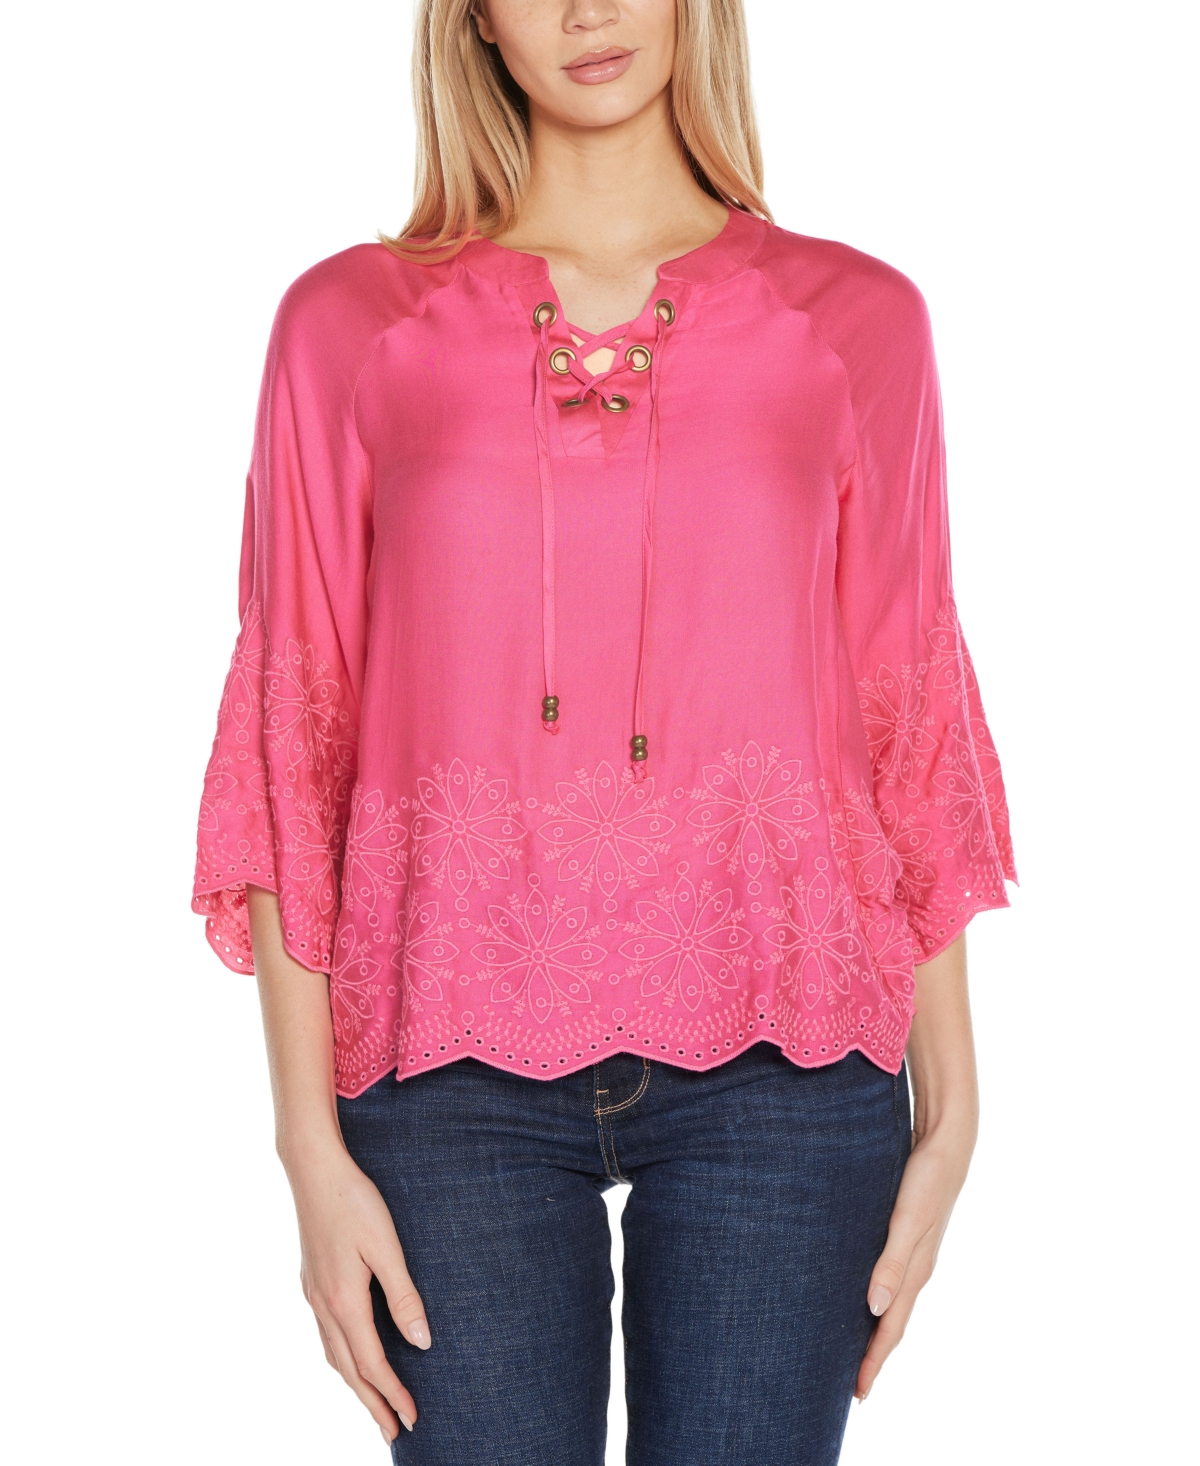 Women's Raglan 3/4-Sleeve Embroidered Top - Petal Pink